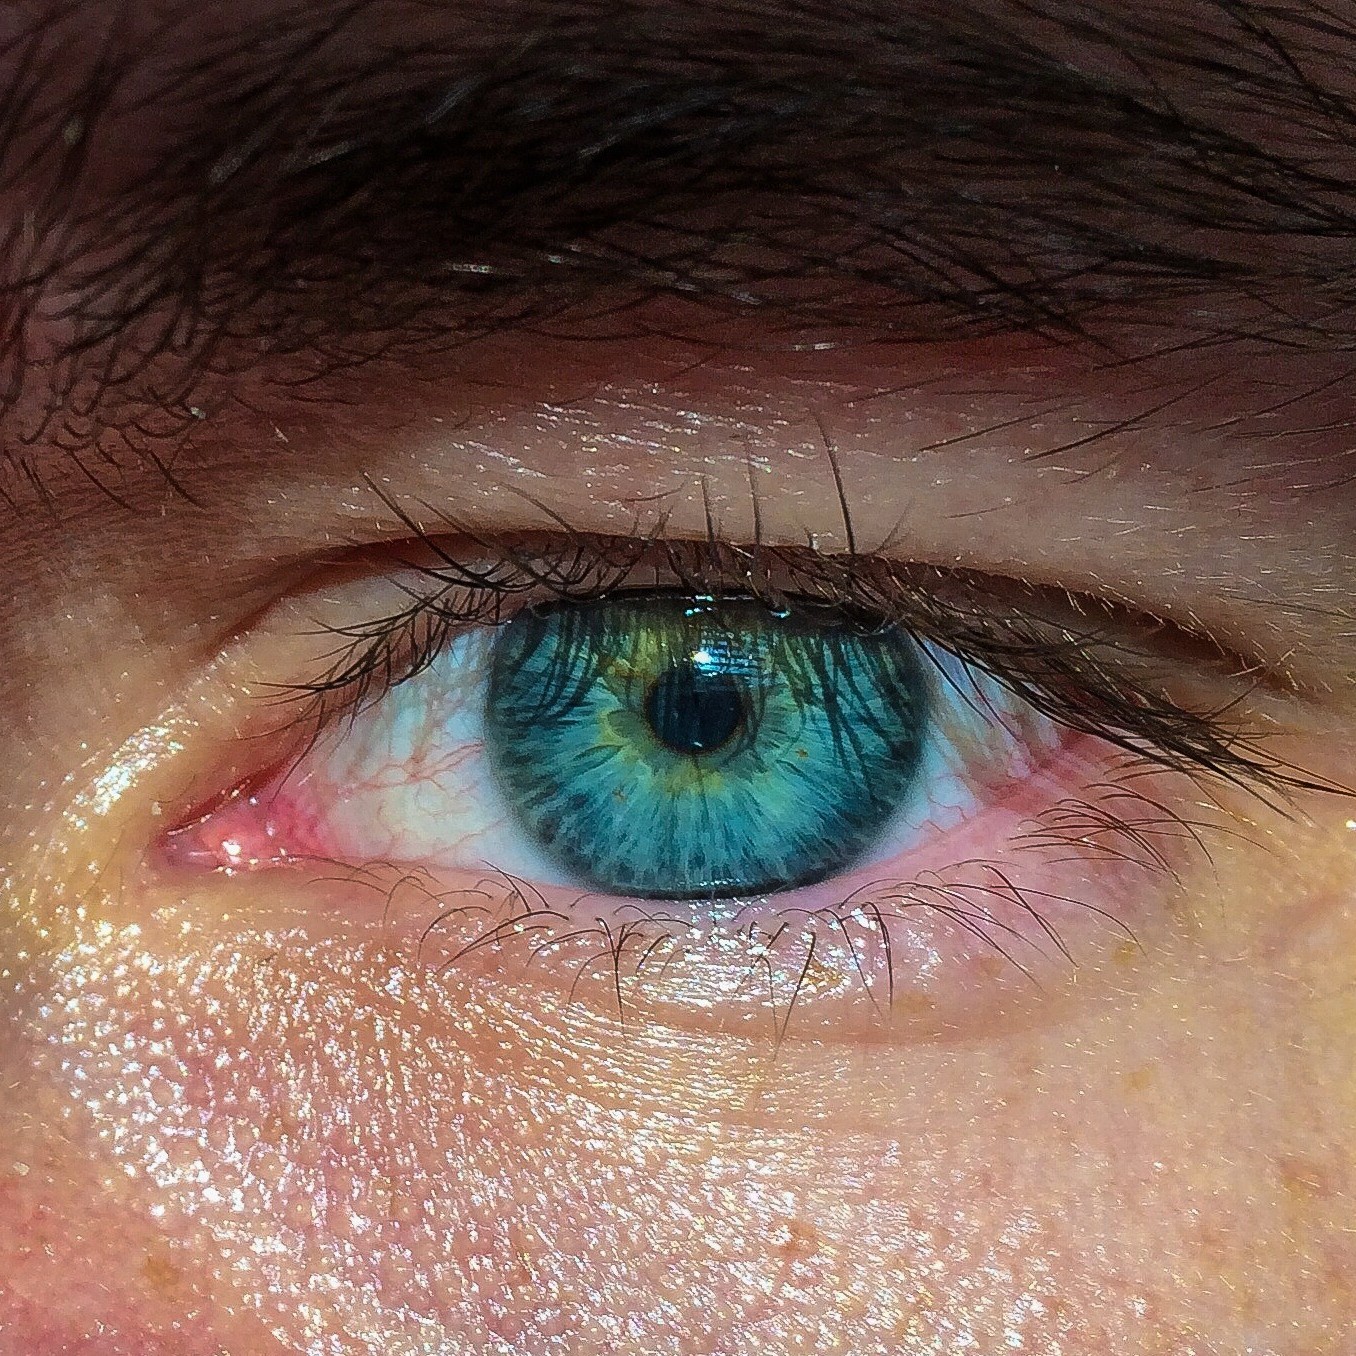 Пестрые глаза. Зелёно-голубые глаза. Голубо-зеленый цвет глаз. Голубой цвет глаз. Глаз человека фото.